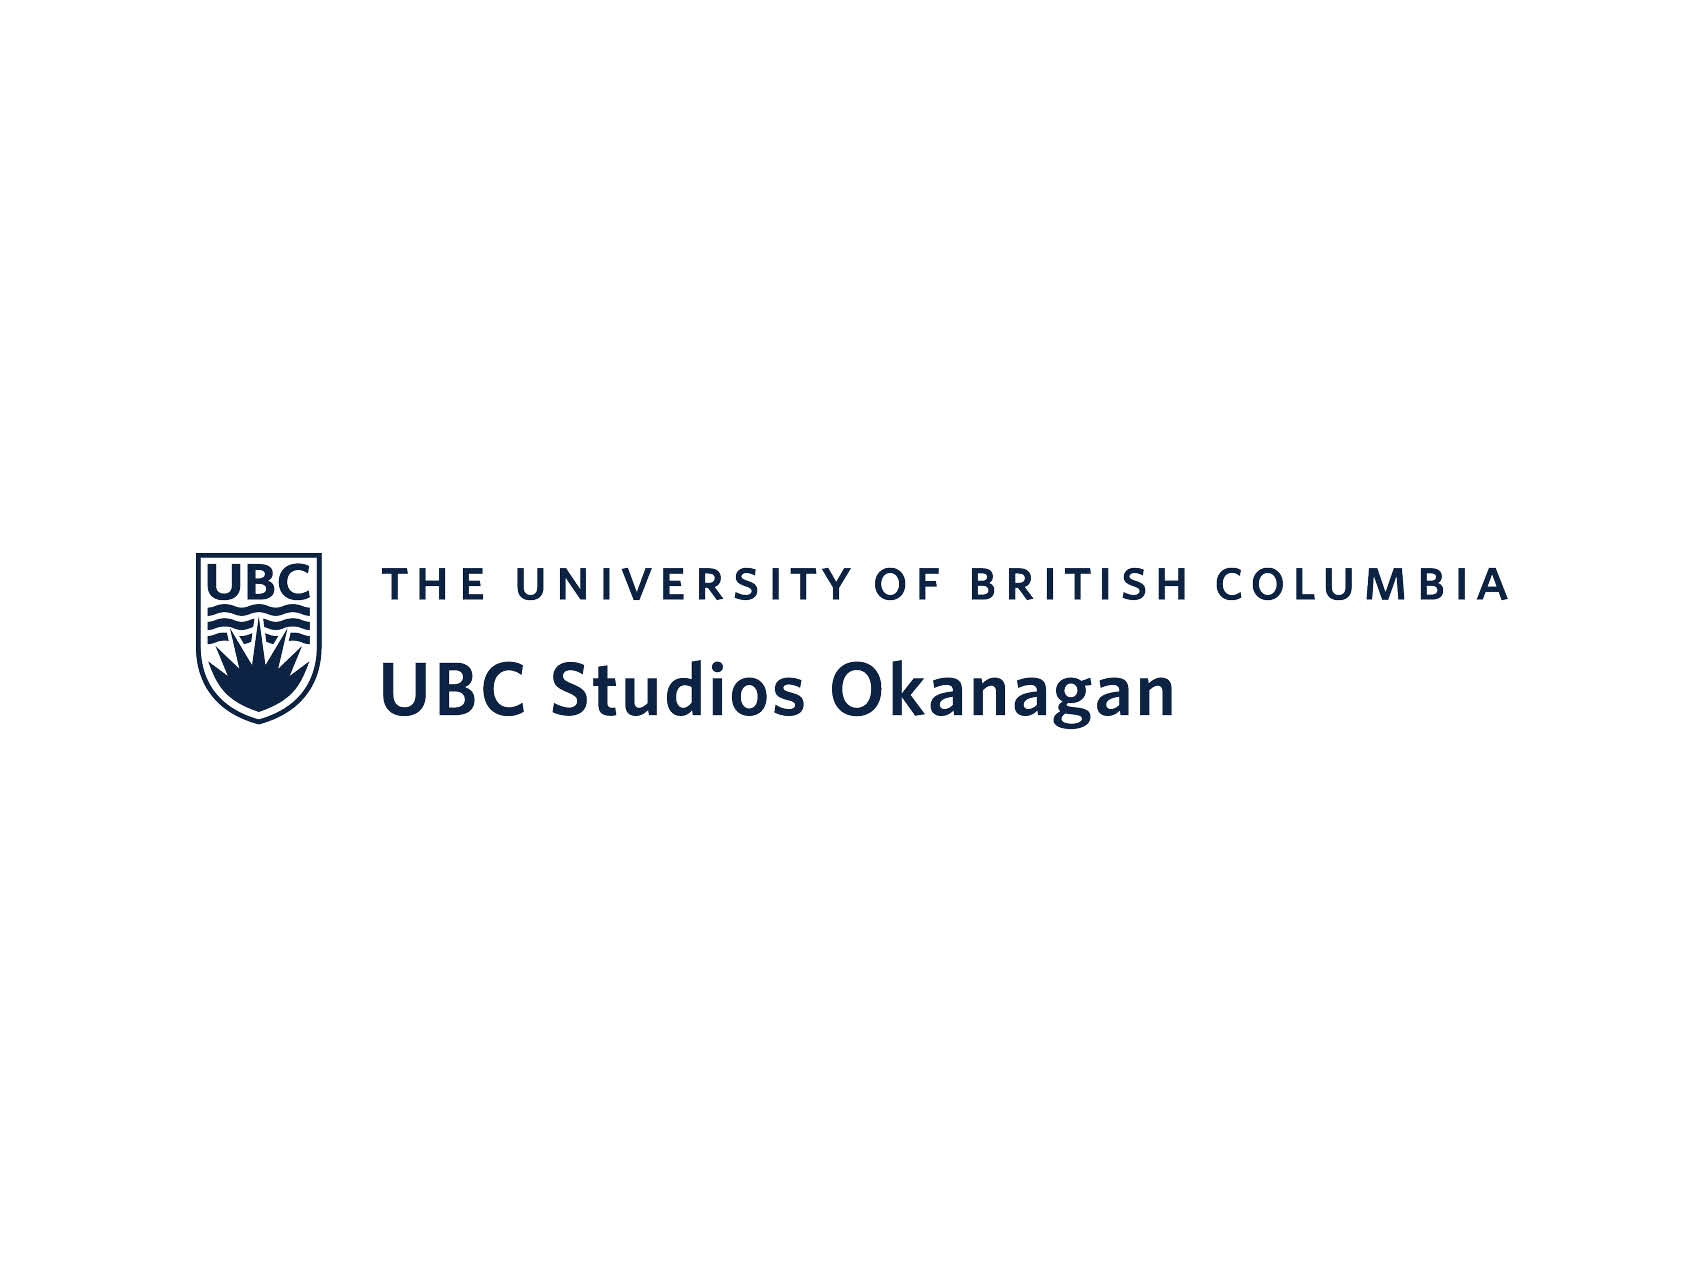 ubc studios okanagan logo